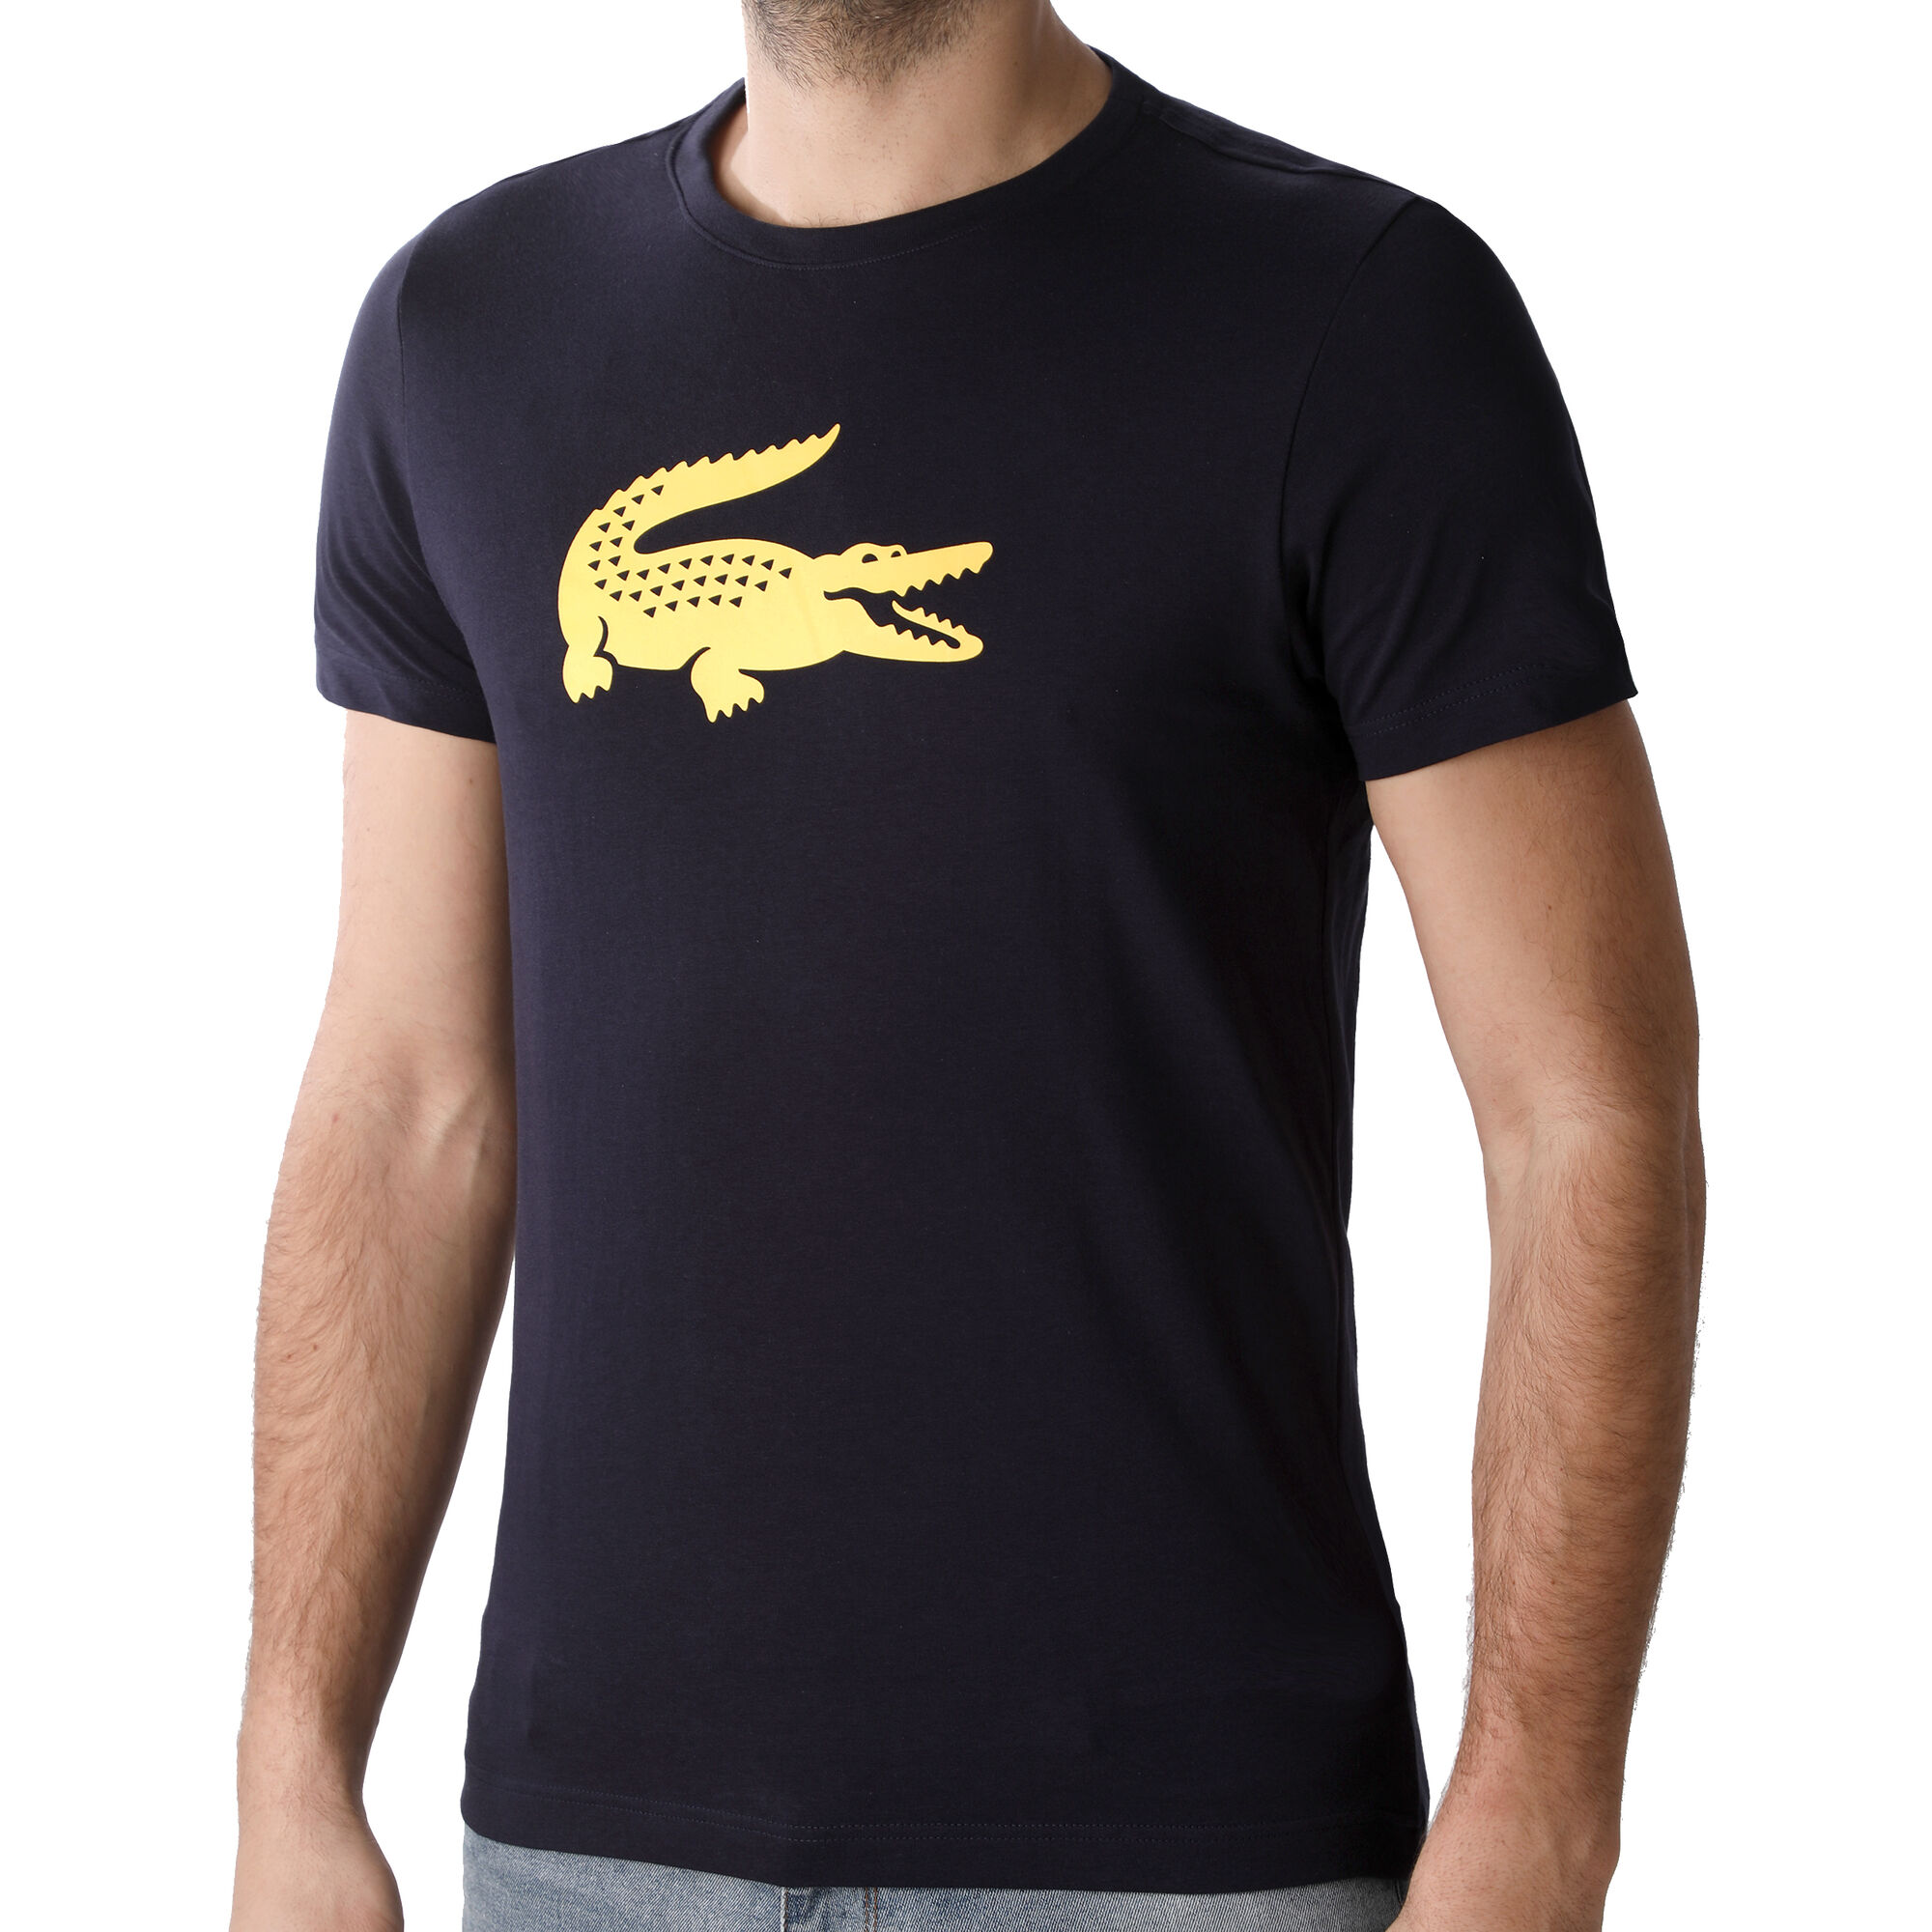 Buy Lacoste T-Shirt Men Dark Blue, Yellow online | Tennis Point UK